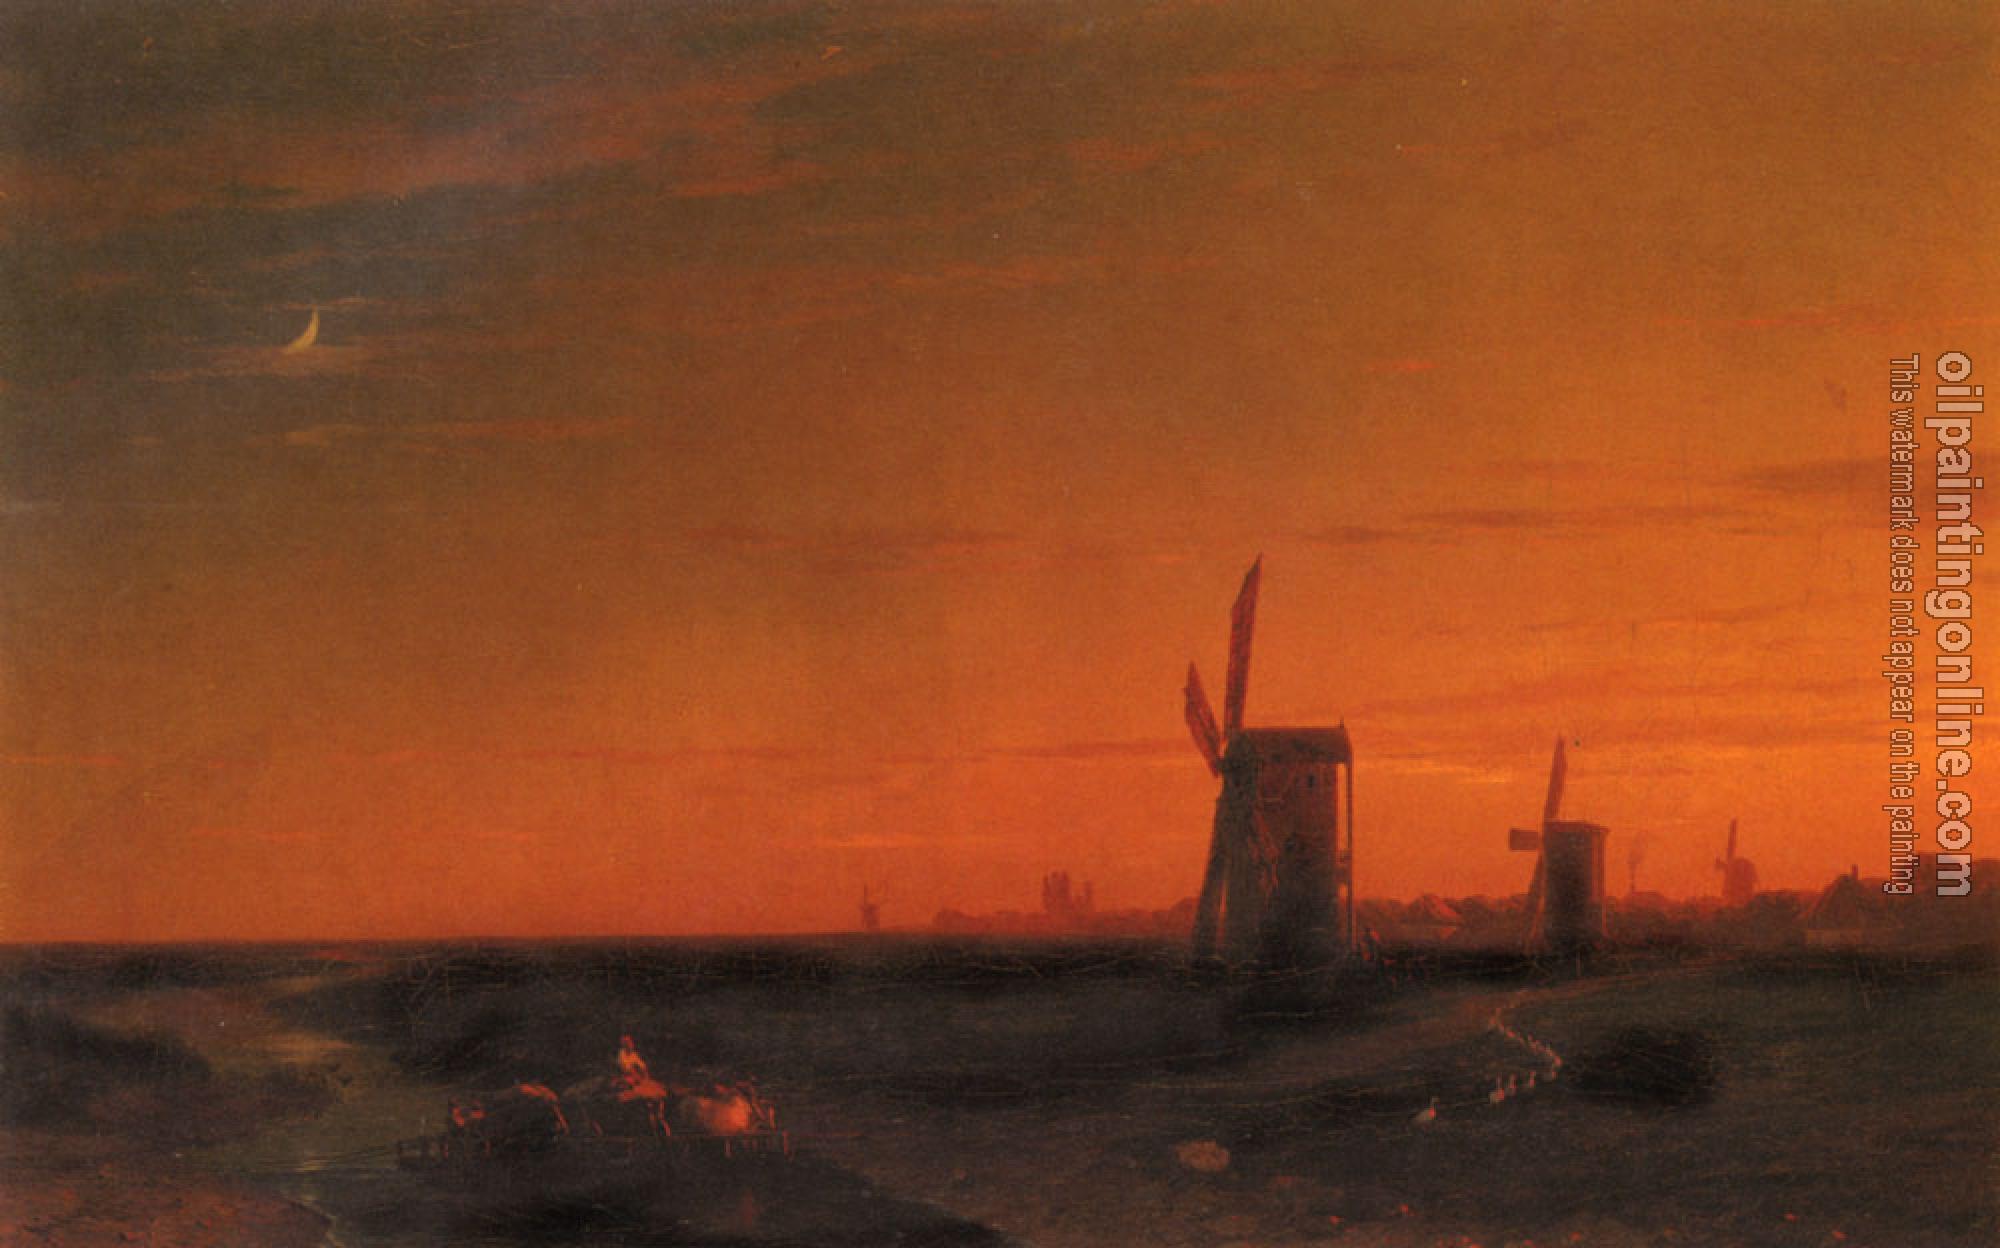 Aivazovsky, Ivan Constantinovich - Landscape With Windmills